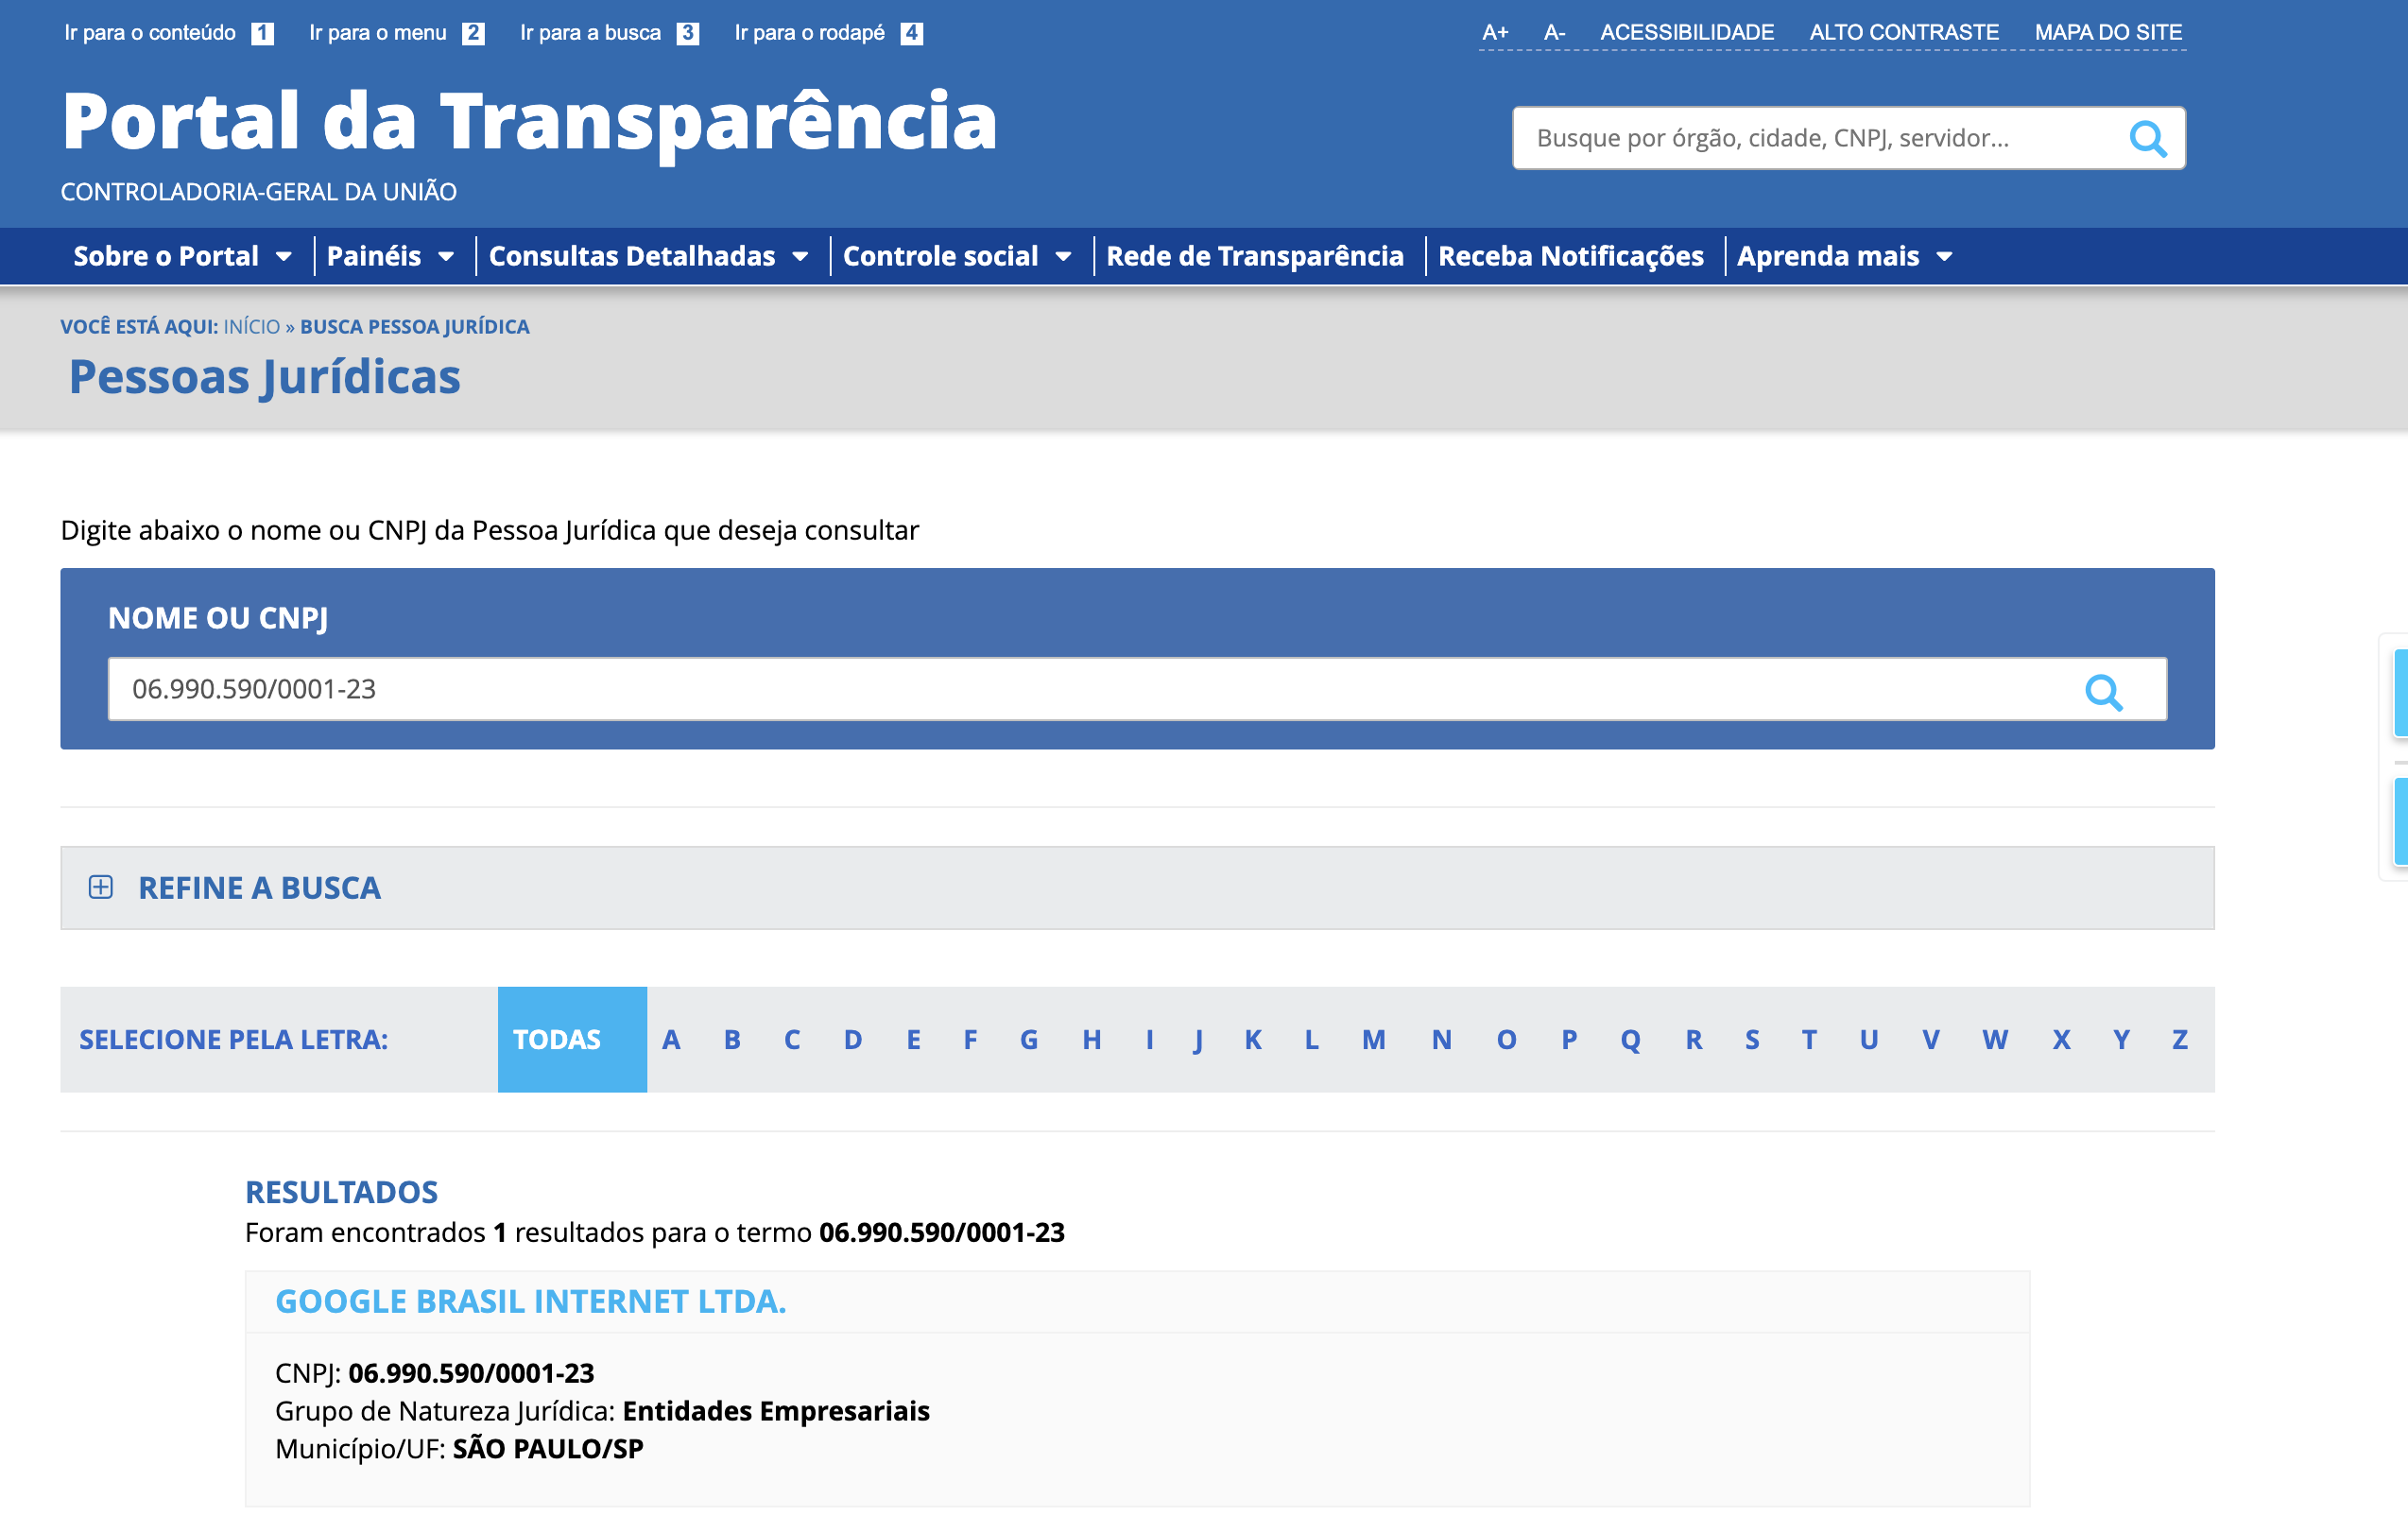 CNPJ Search on Transparency Portal